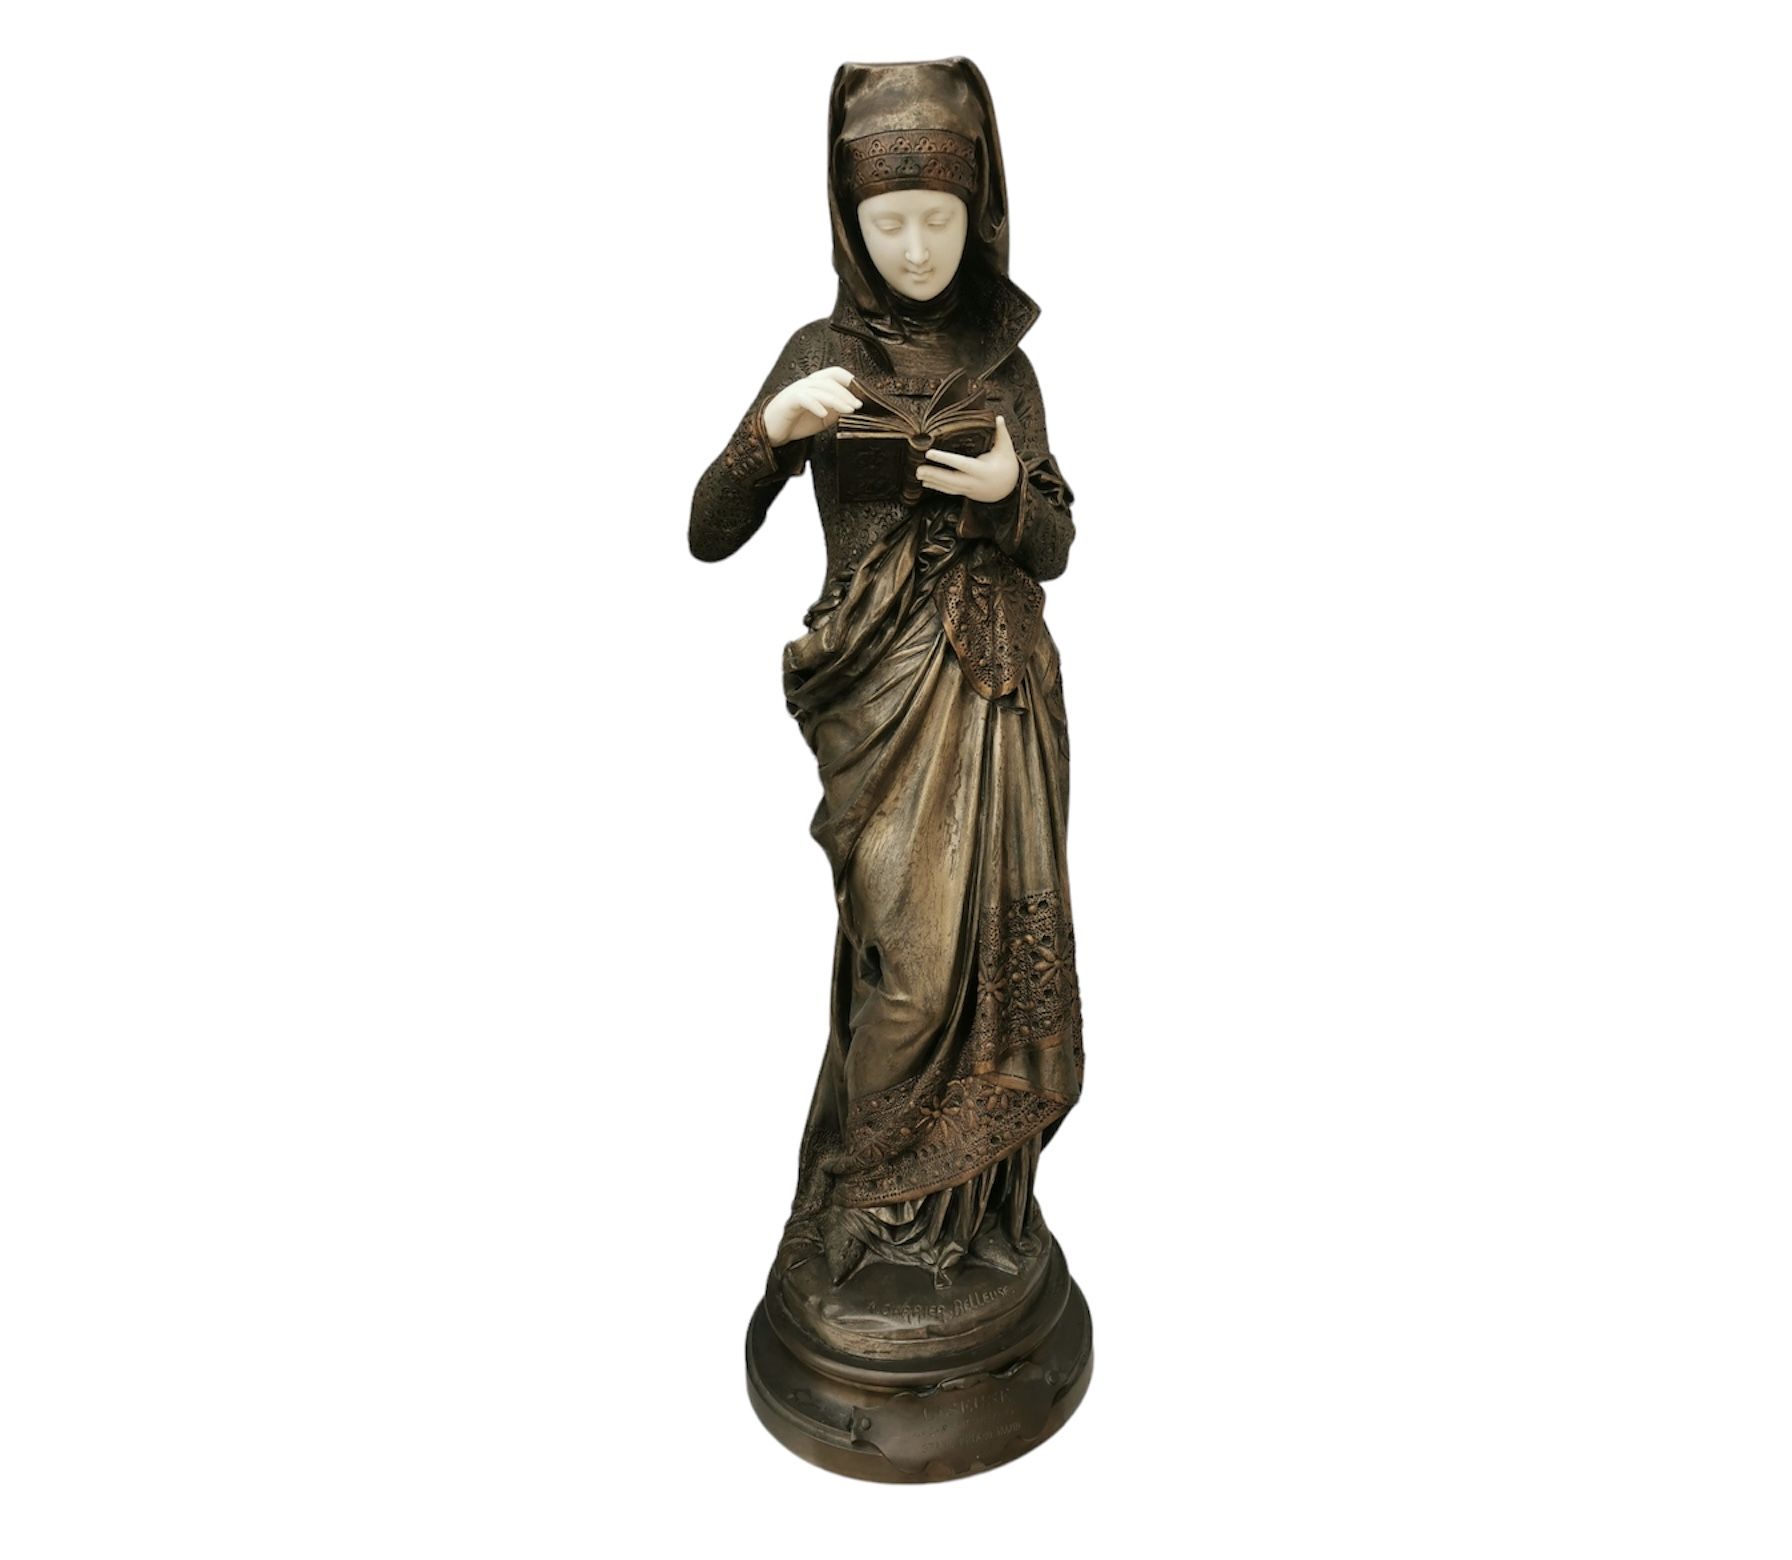 Carrier Belleuse, Liseuse, bronze